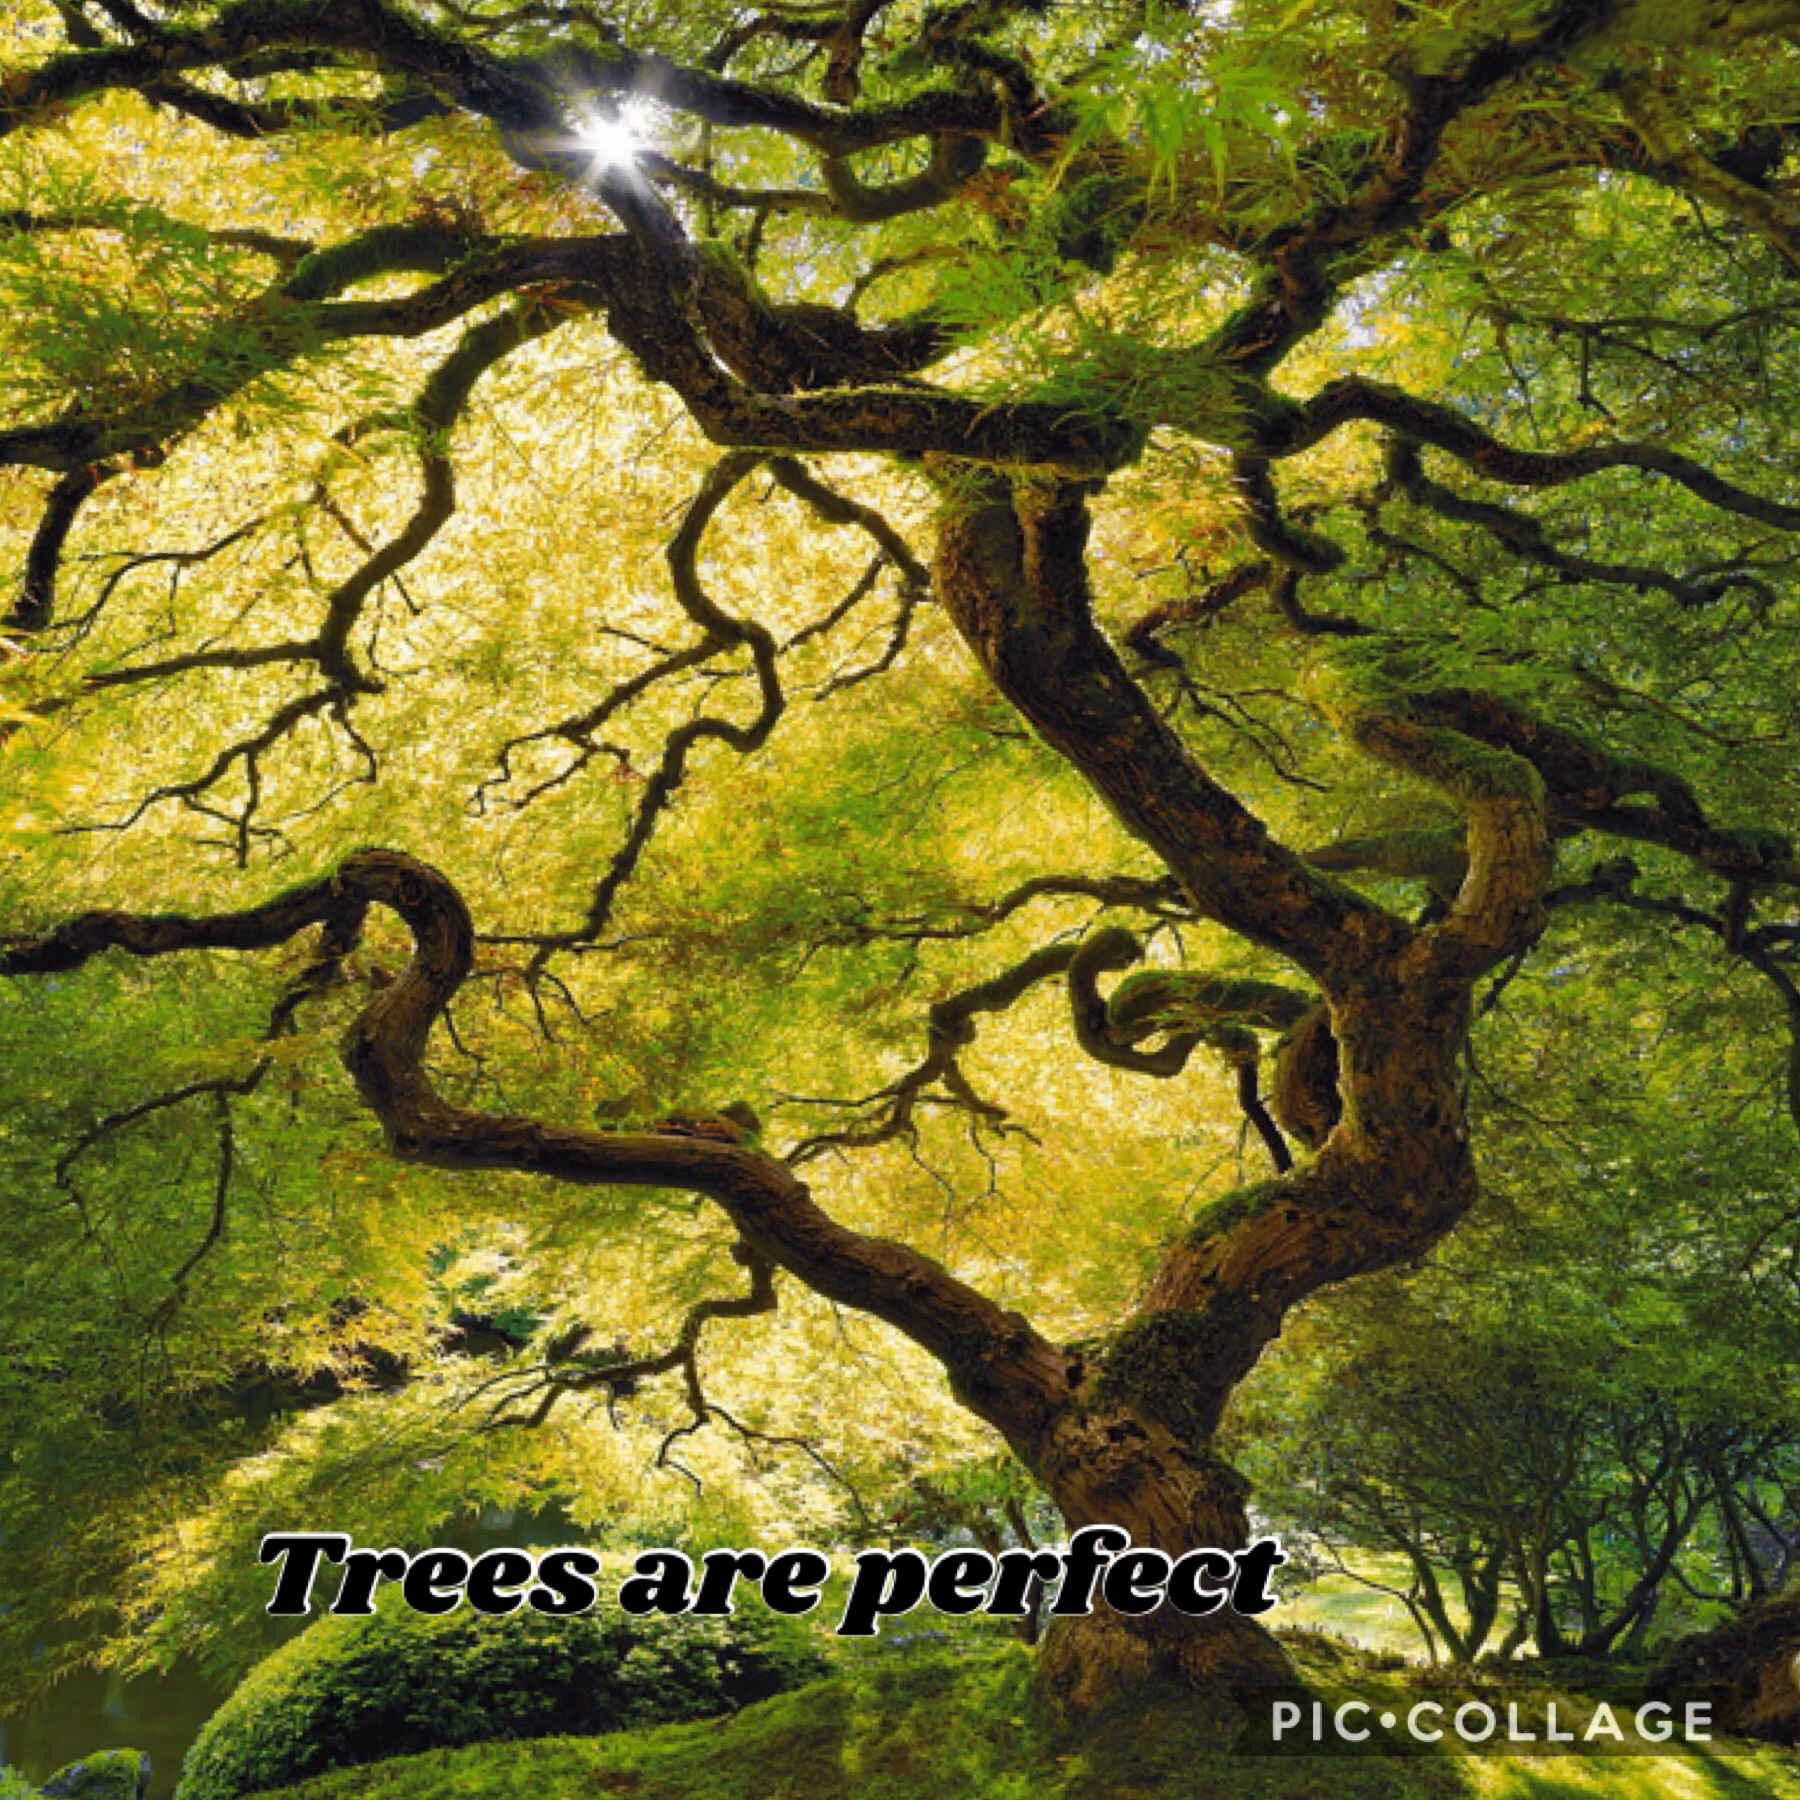 The best tree
